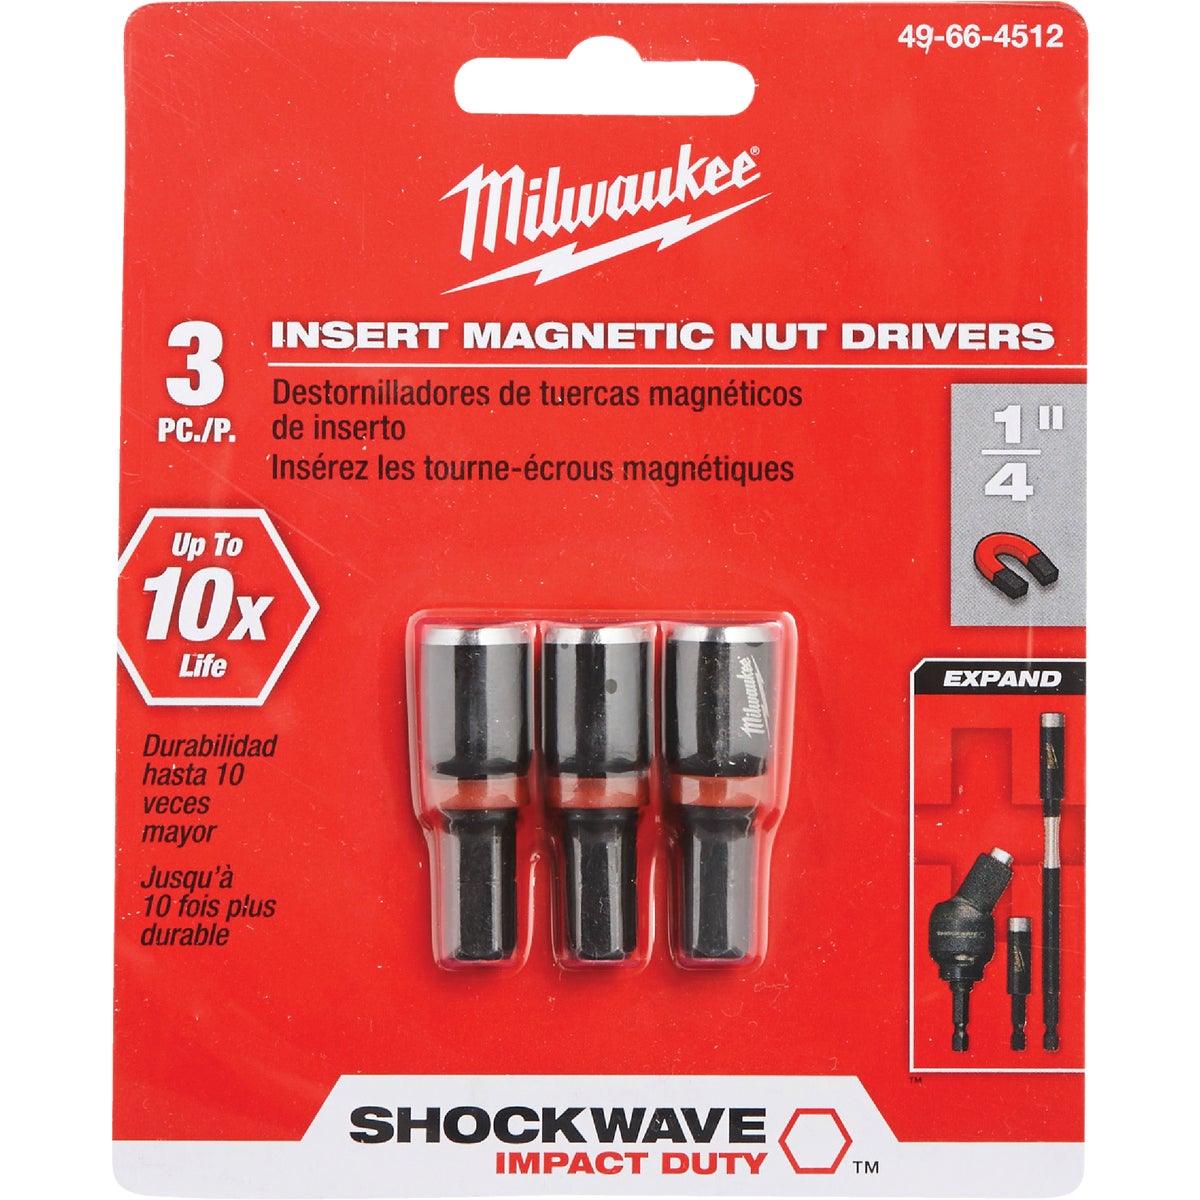 Millwaukee SHOCKWAVE 1/4 In. x 1-1/2 In. Insert Impact Nutdriver, (3-Pack)